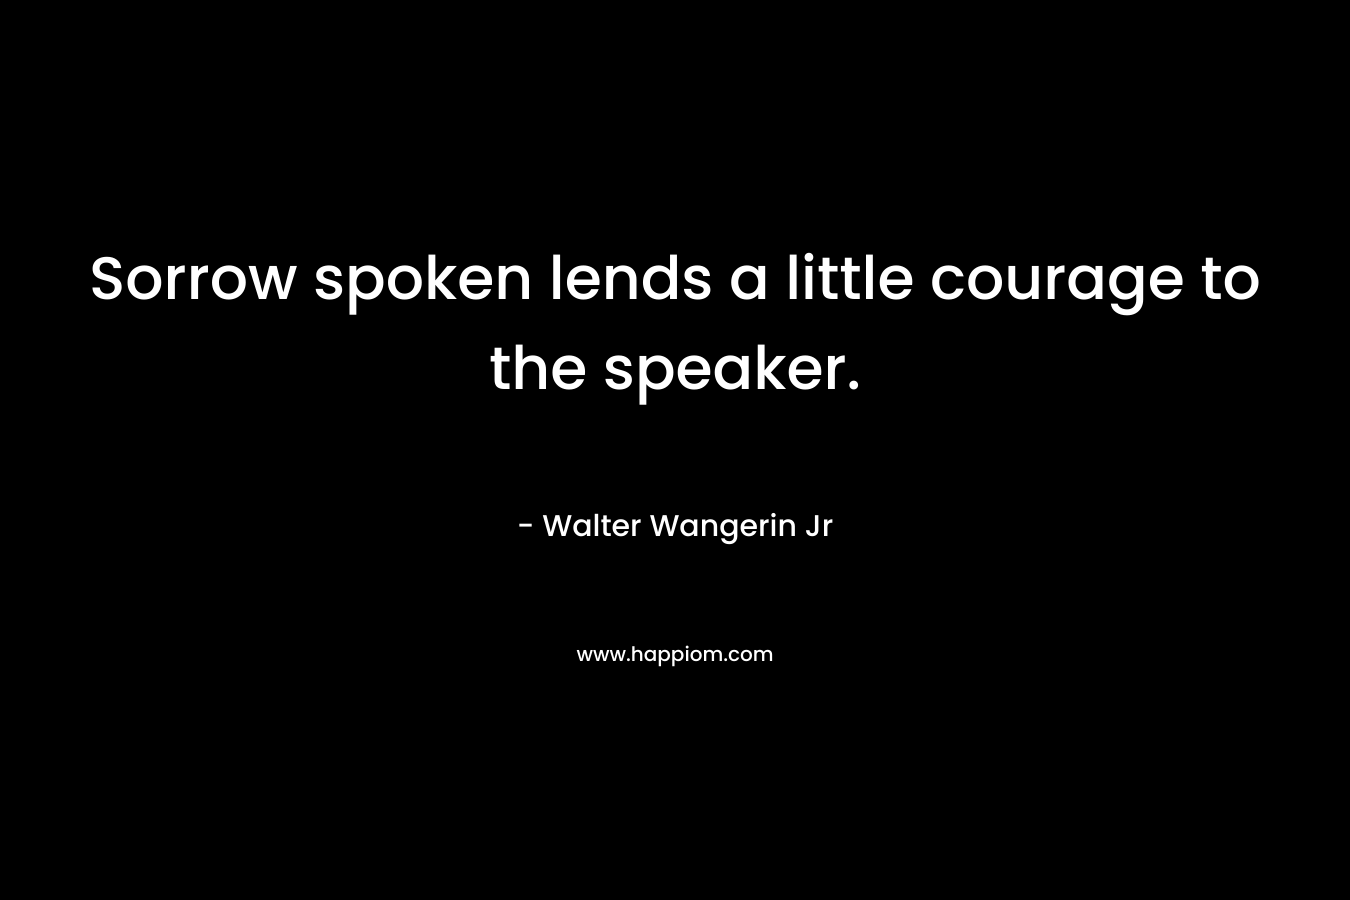 Sorrow spoken lends a little courage to the speaker.